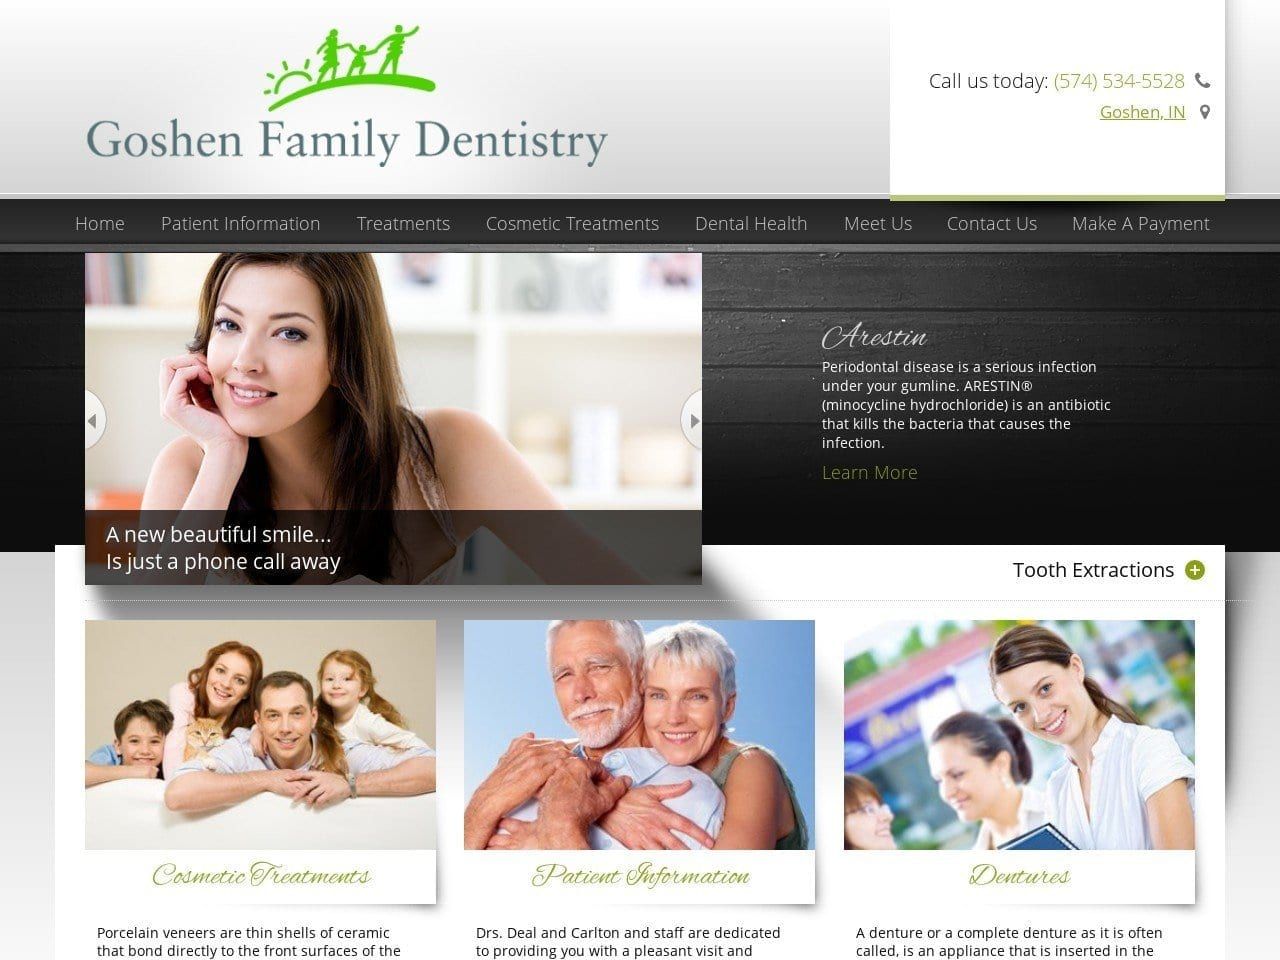 Goshen Family Dentistry Website Screenshot from goshenfamilydentistry.com